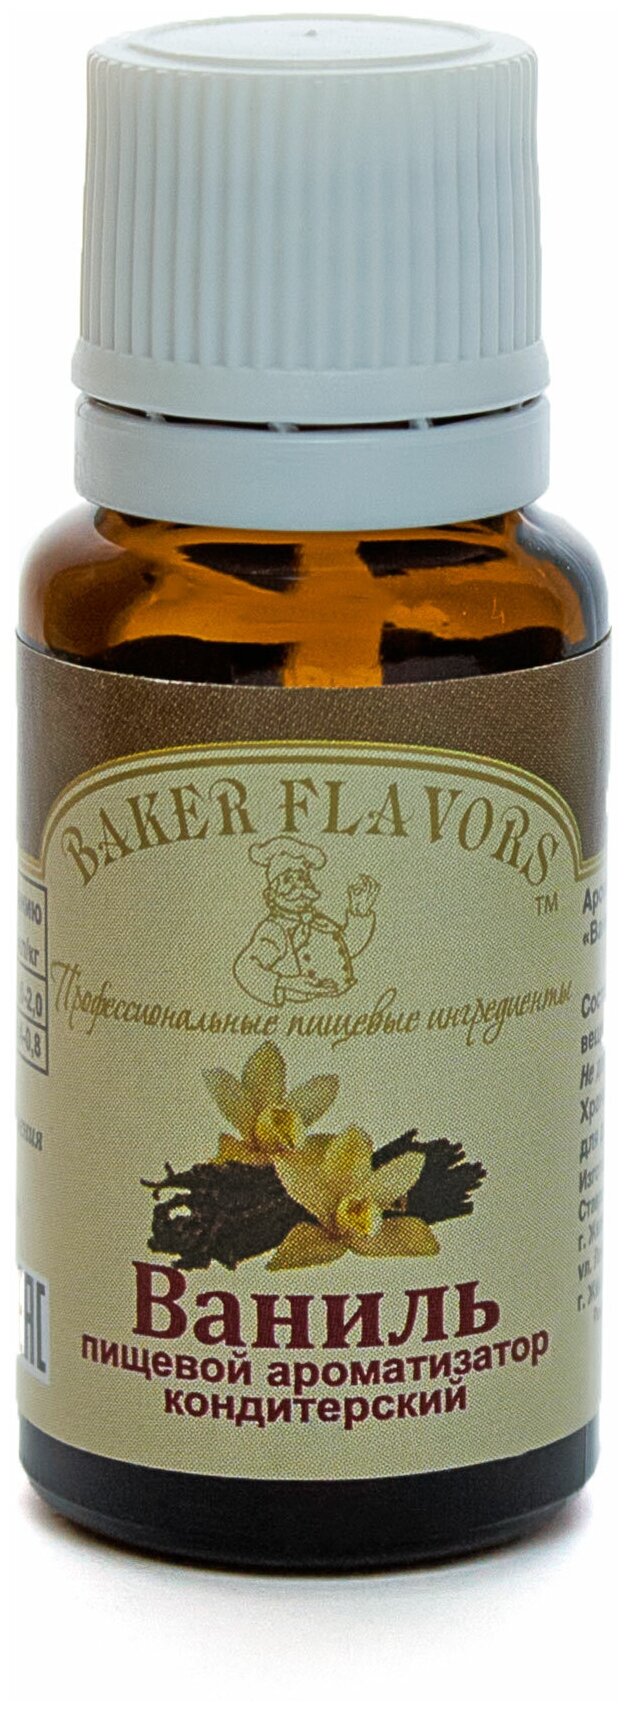 Baker Flavors ароматизатор пищевой Ваниль, 10 мл